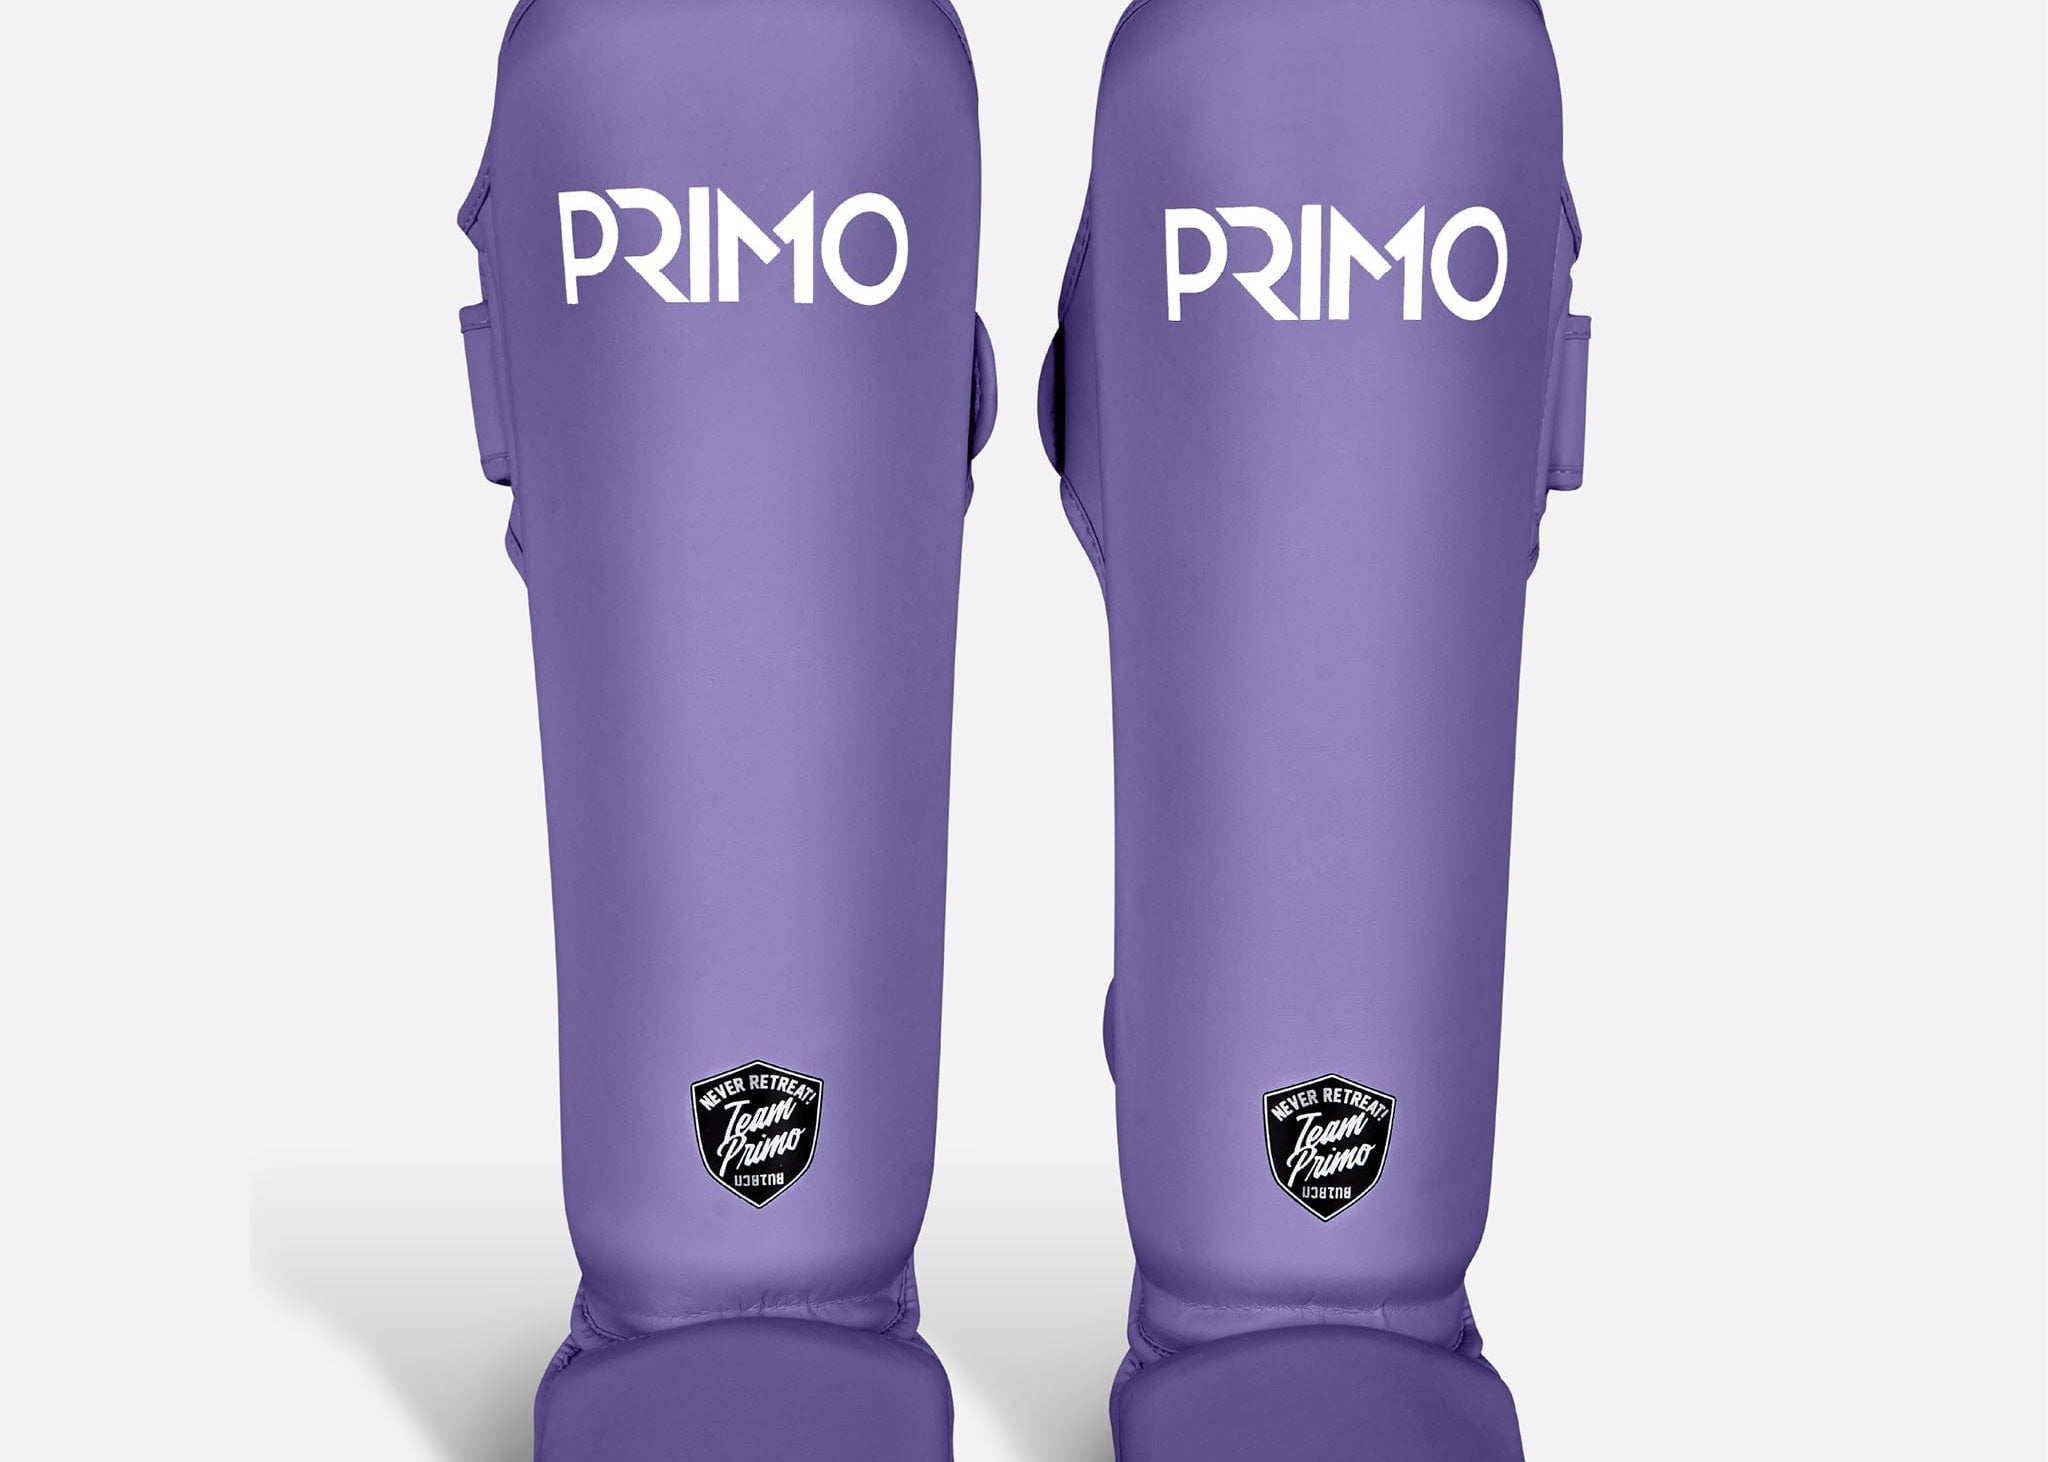 Primo Fight Wear Official Classic Muay Thai Shinguard - Purple